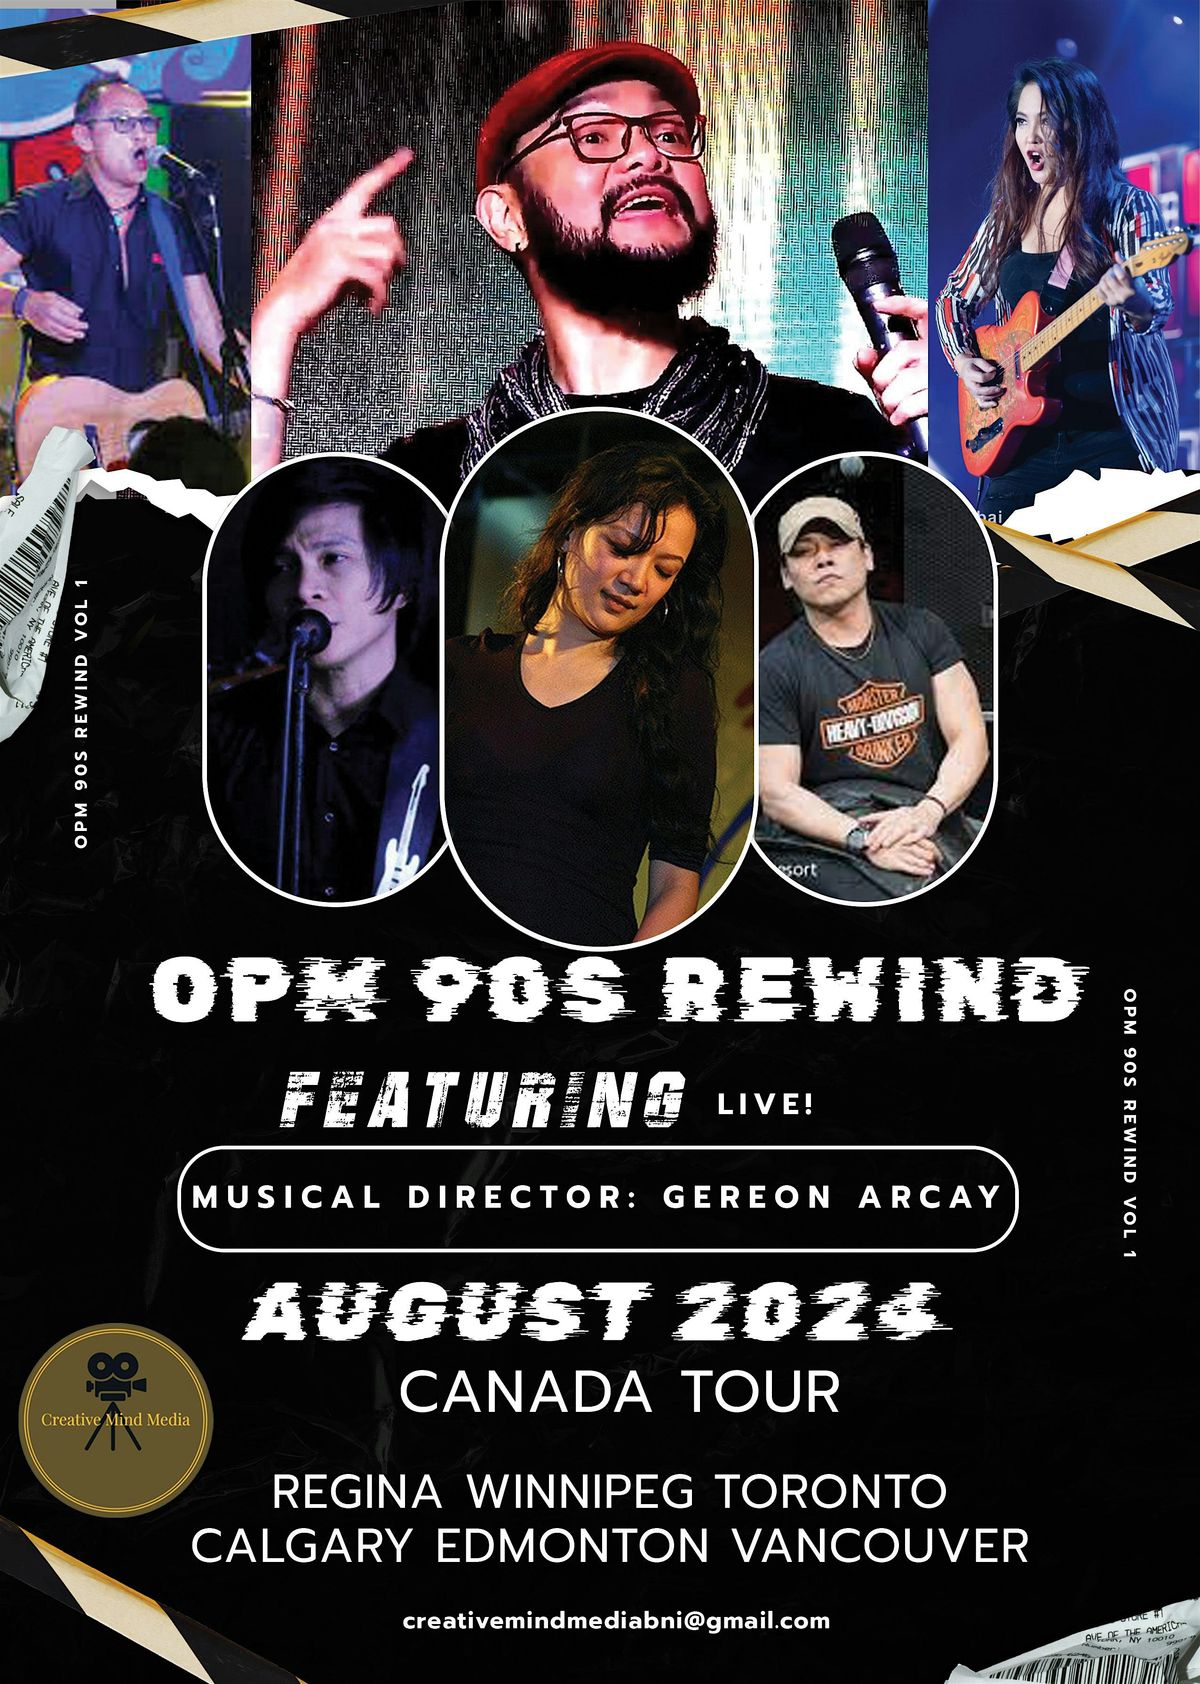 OPM 90s Rewind - Toronto